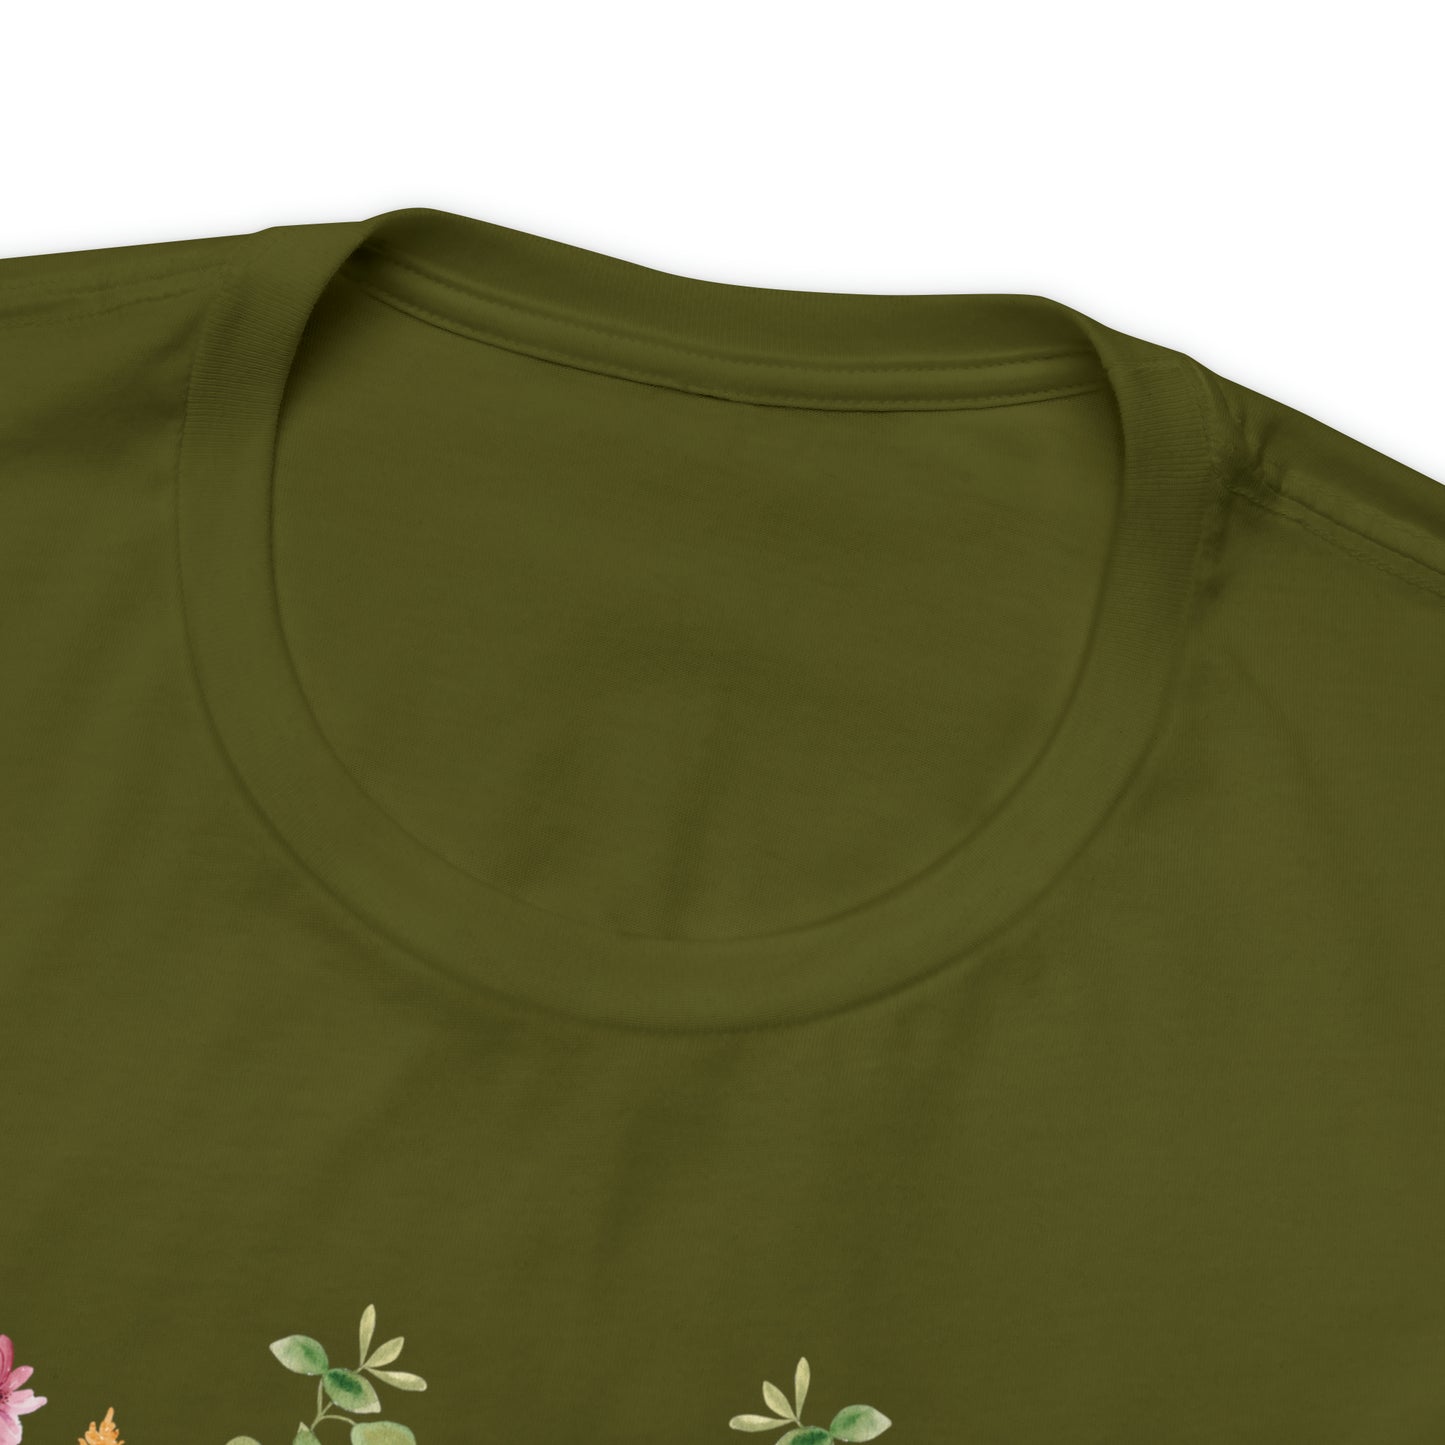 Wildflower Tshirt Flowers Shirt Floral Tshirt Flower Shirt Gift for Women - Ladies Shirts Best Friend Gift, Plant Mom Stay Wild flower lover